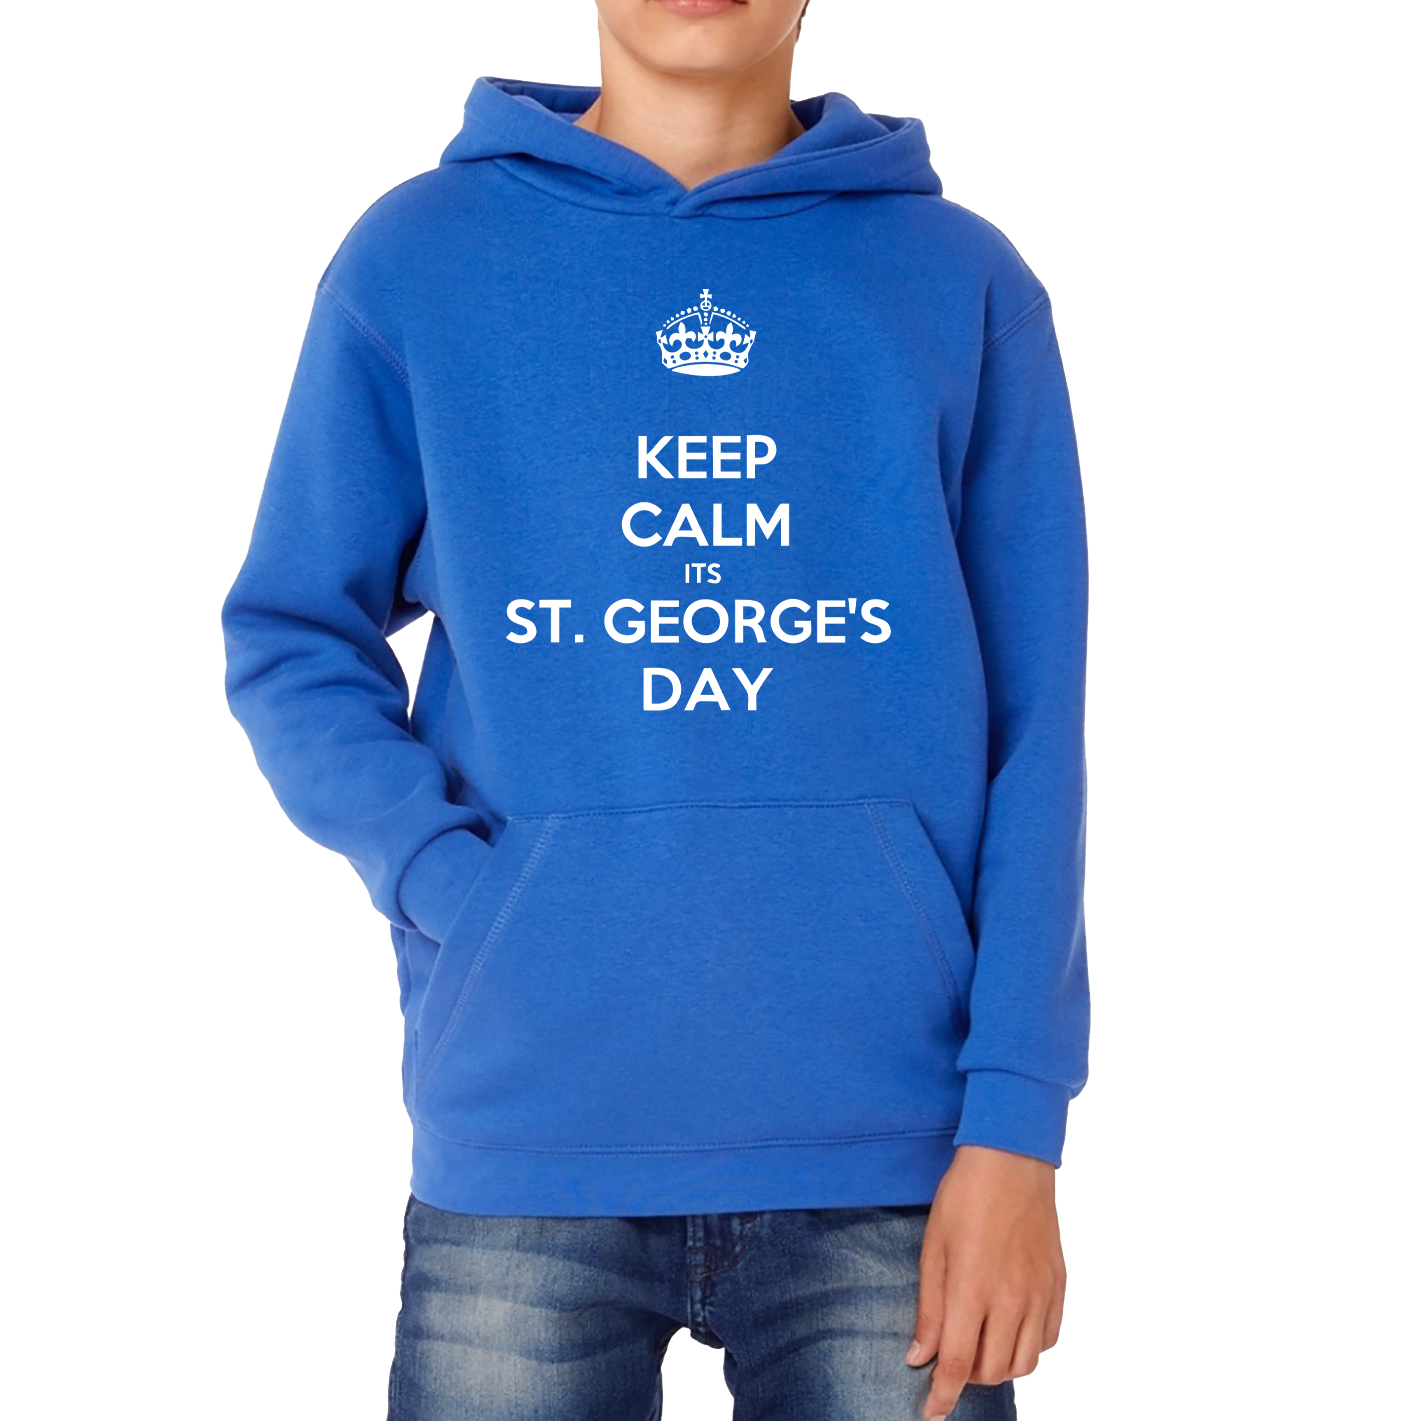 Keep Calm Its St. George's Day Kids Hoodie